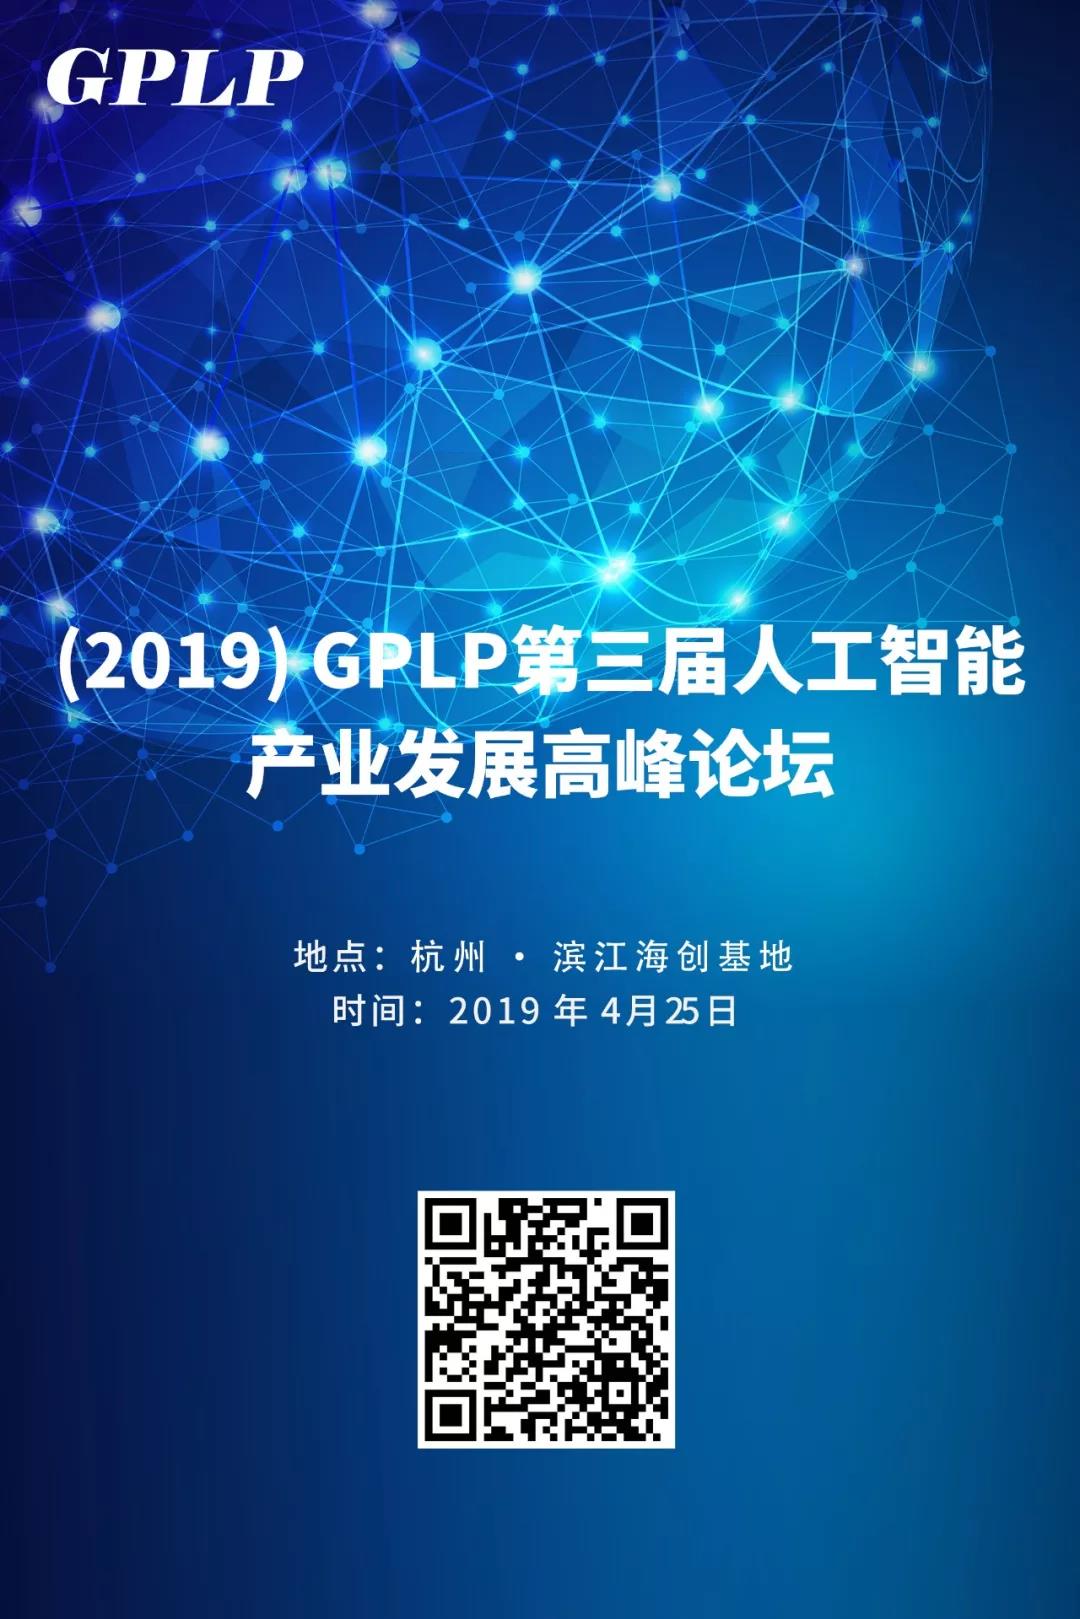 “2019 GPLP第三届人工智能产业高峰论坛”震撼启幕